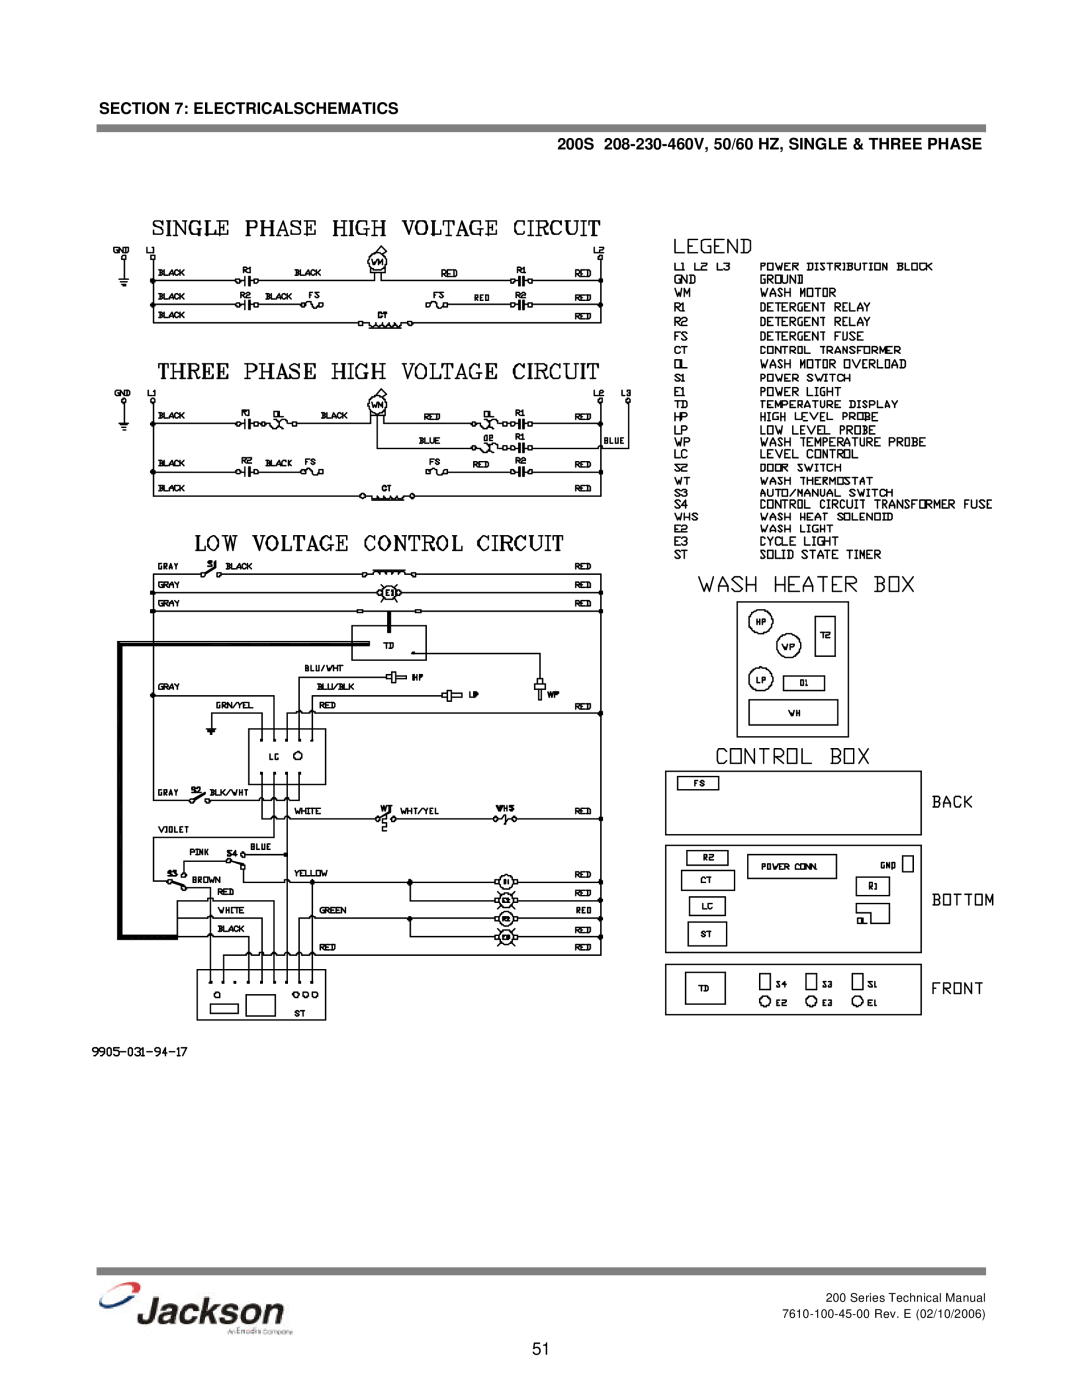 Jackson 200LT, 200B technical manual 200S 208-230-460V, 50/60 HZ, SINGLE & THREE PHASE, Electricalschematics 